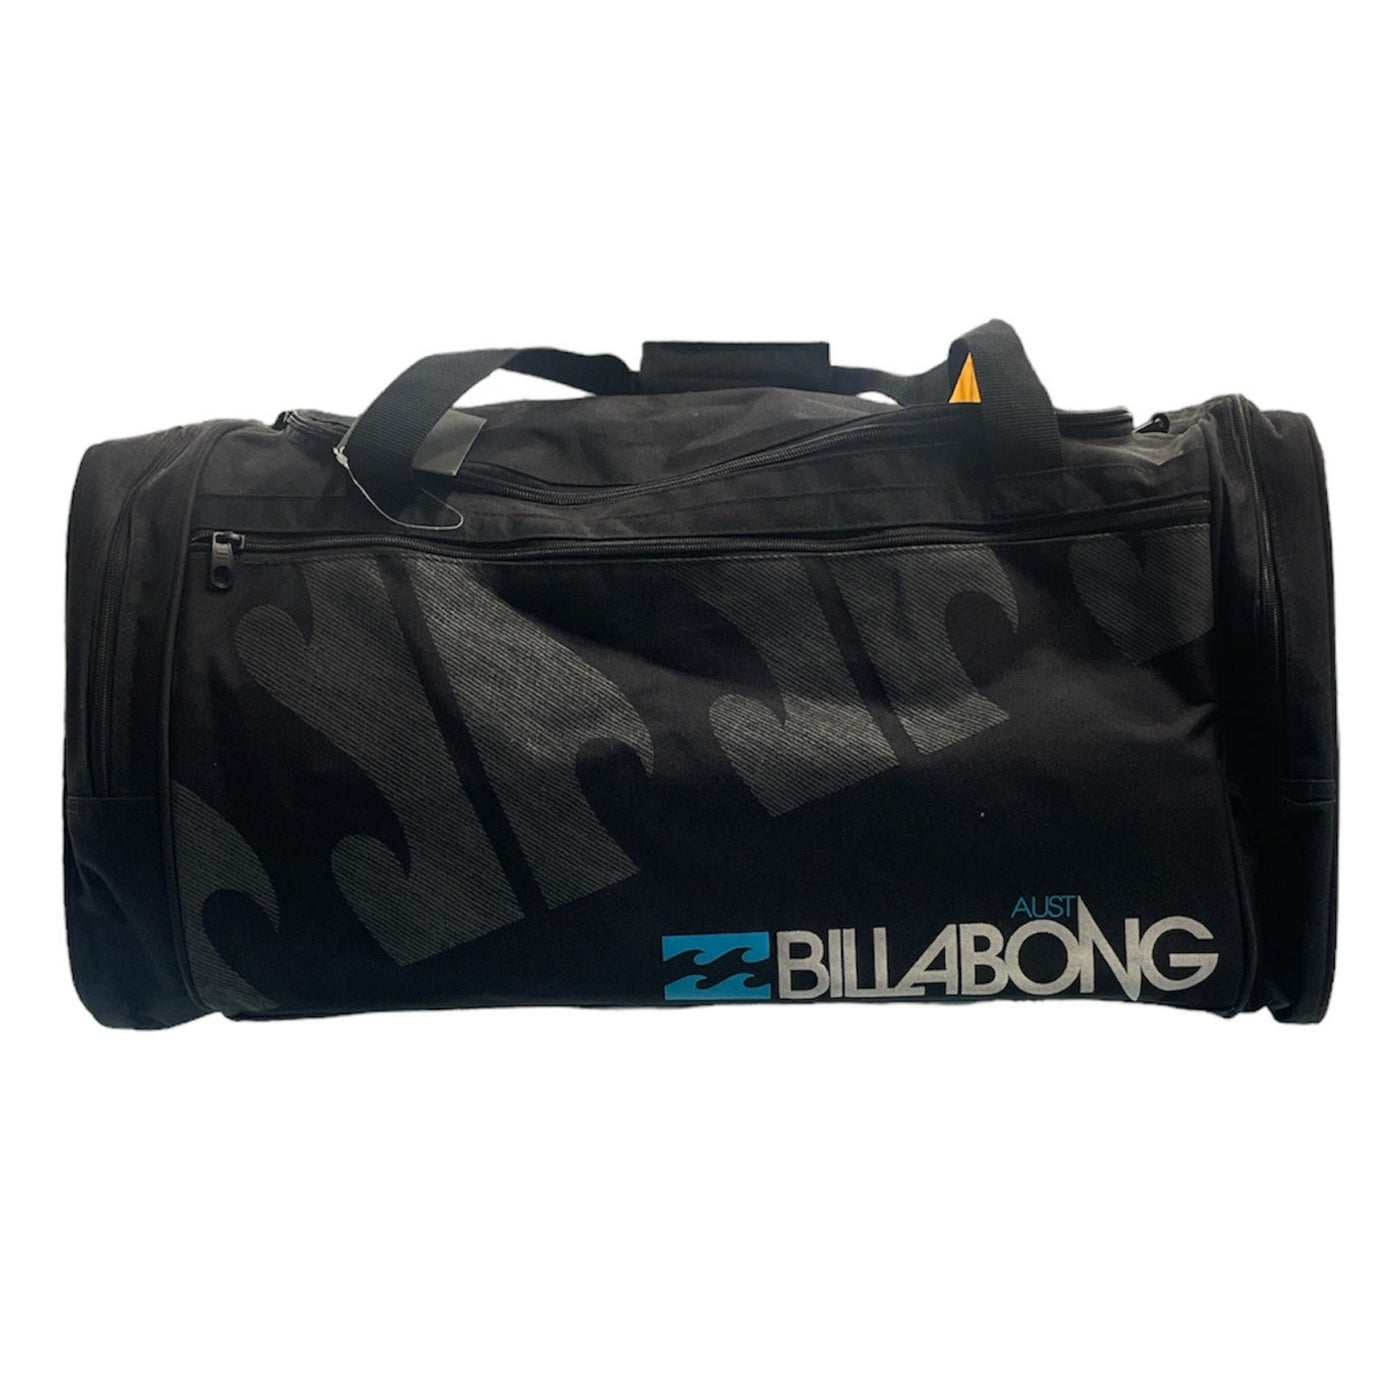 Billabong Transfer Travel Bag - Black